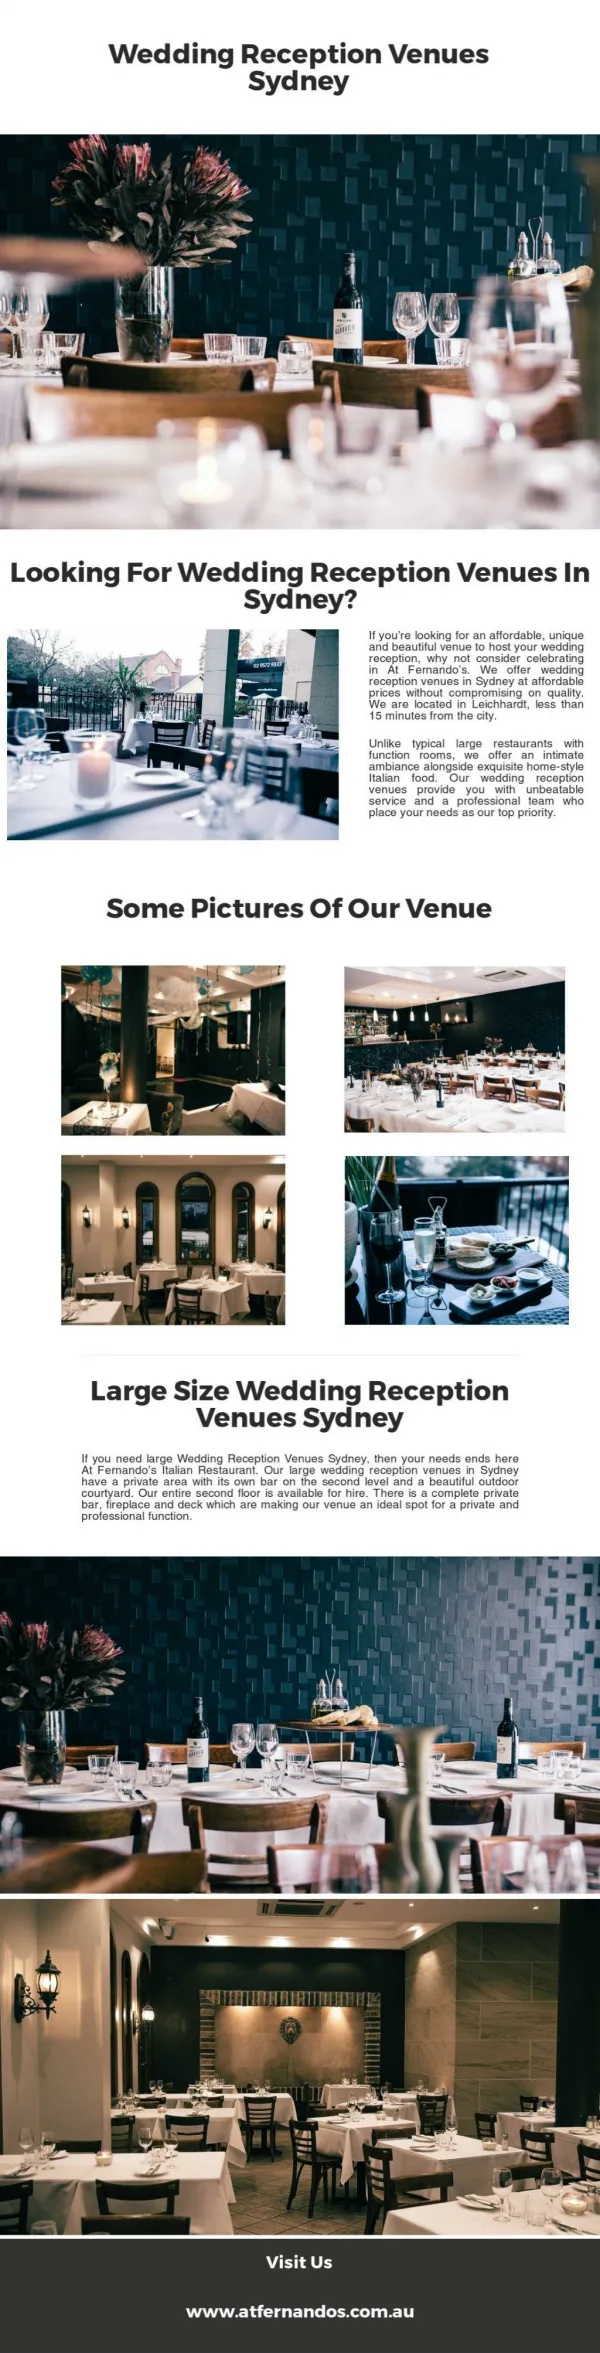 Searching For Wedding Reception Venues Sydney?